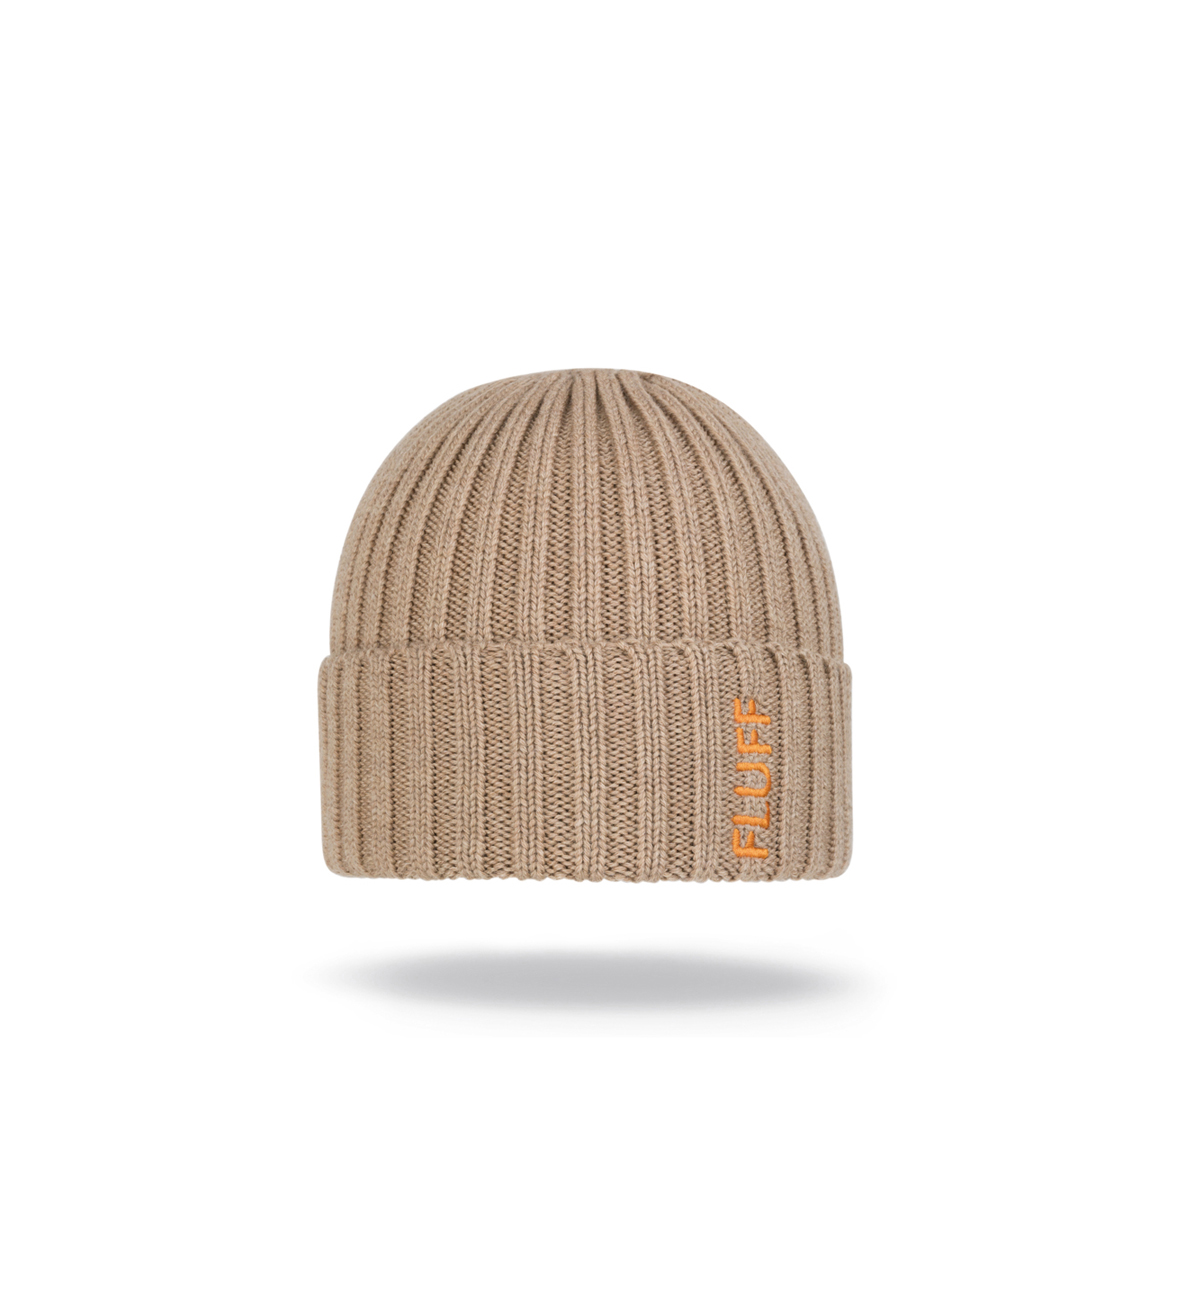 Merino wool beanie hat with embroidered logo. Warm, soft wool winter beanie.